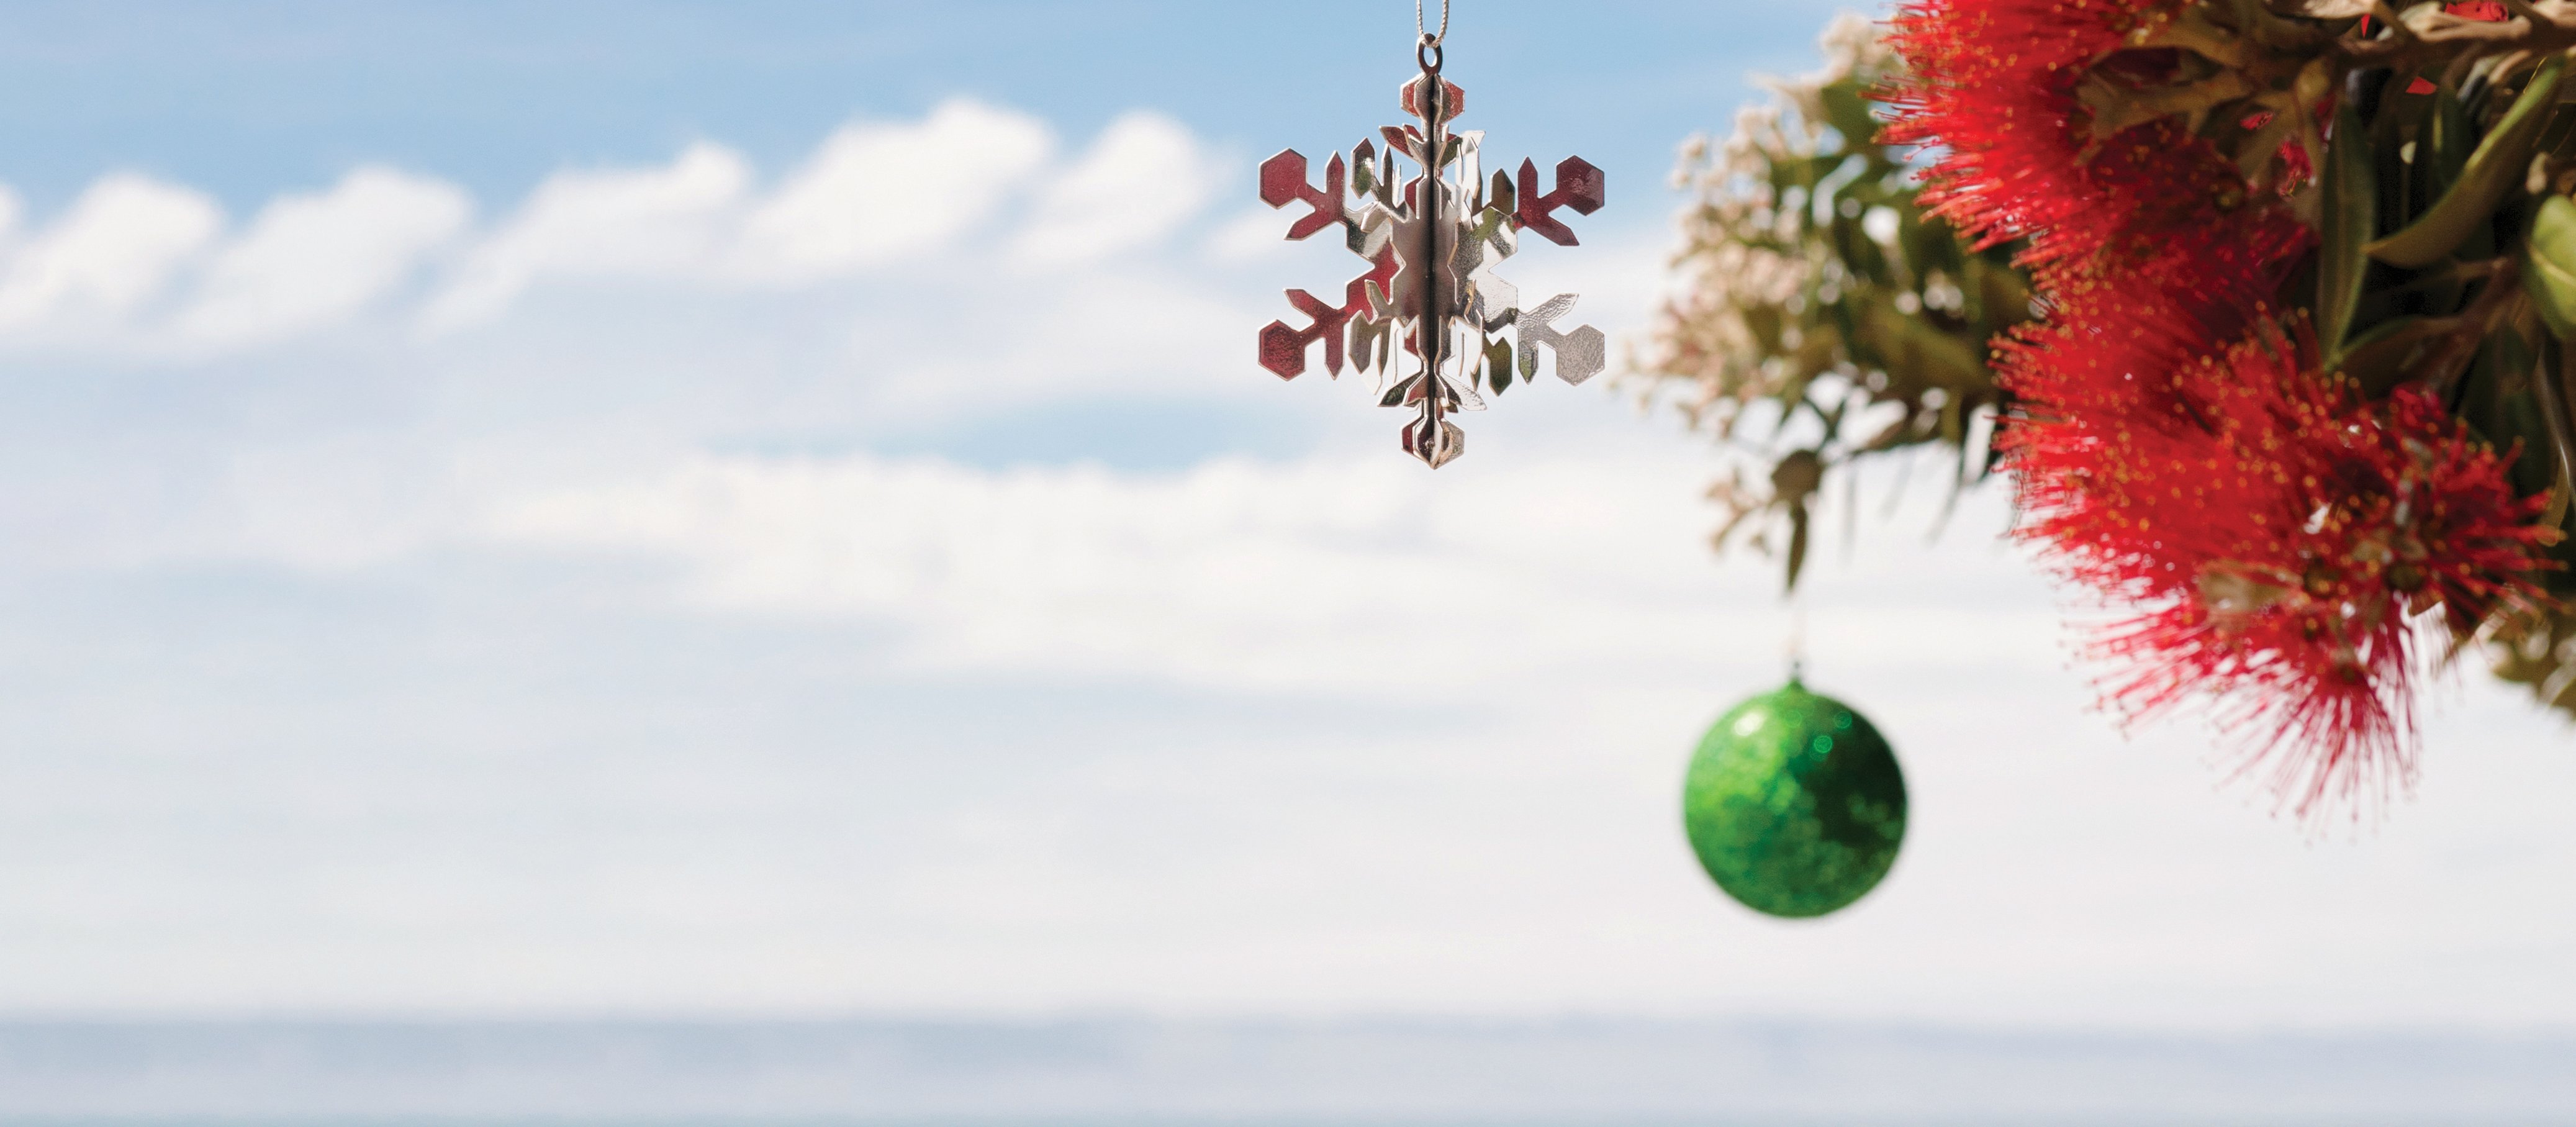 Christmas Pohutakawa tree at the beach - Credit: georgeclerk on iStock.com